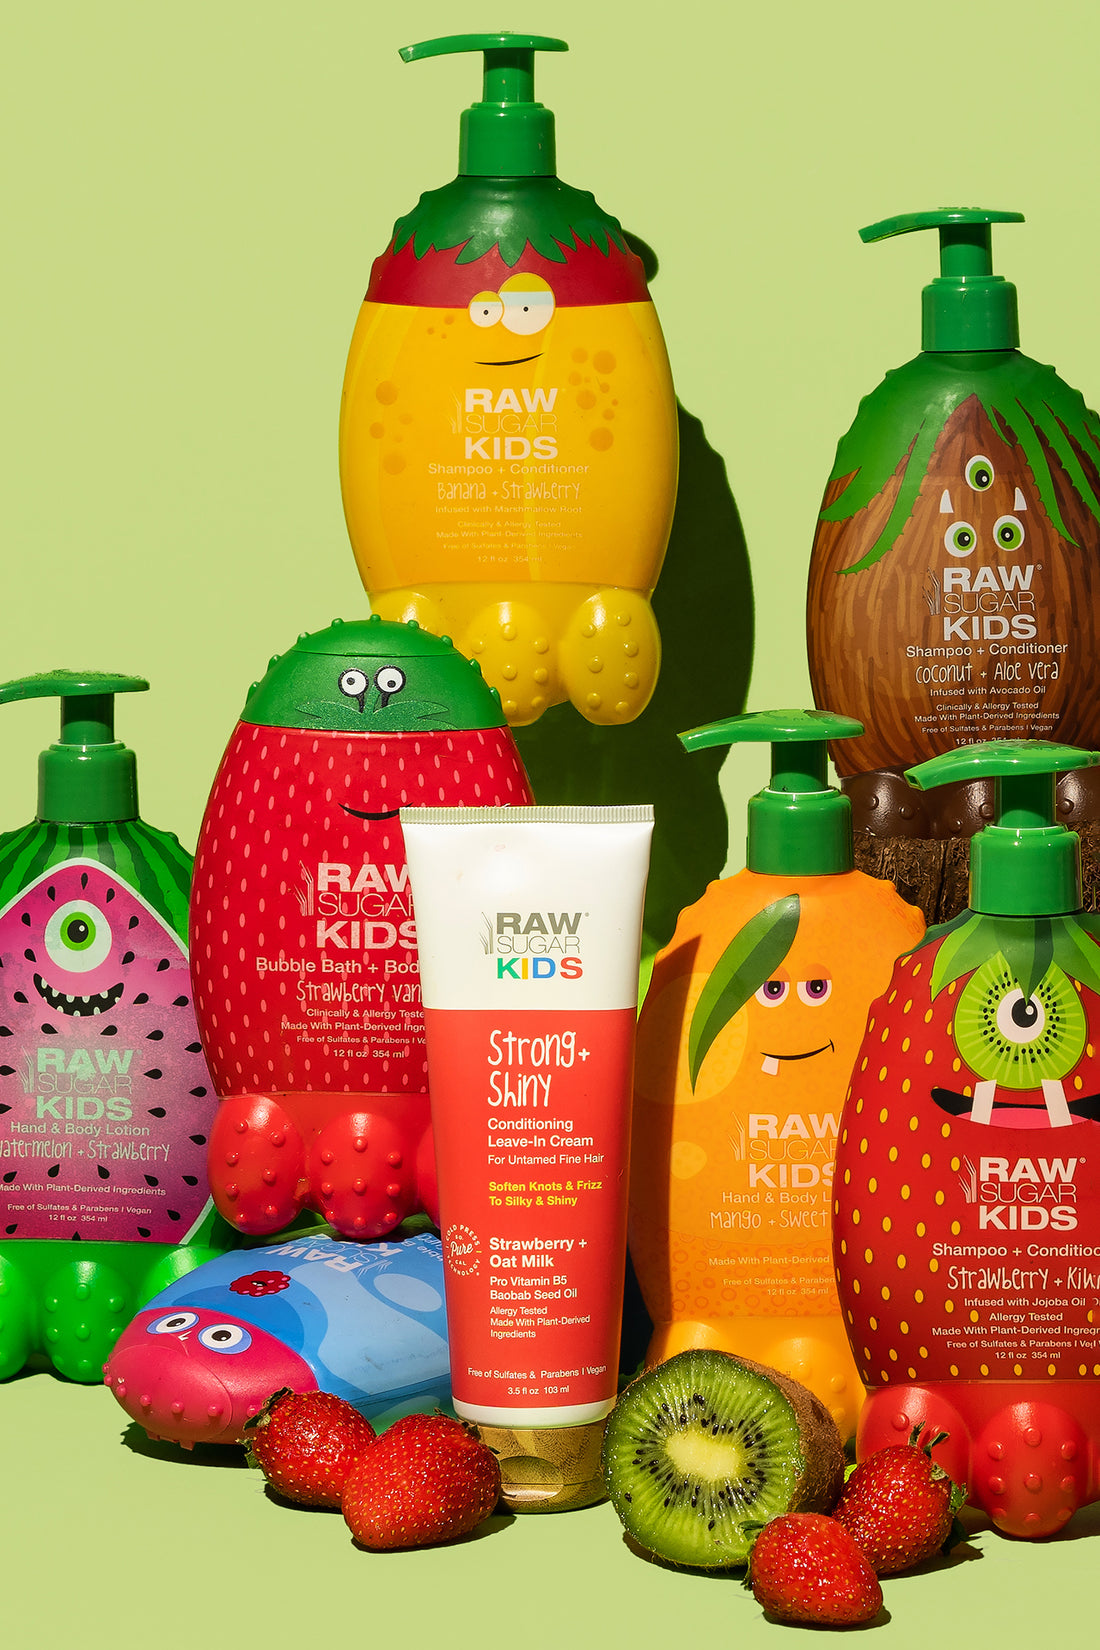 Raw Sugar Kids products with fresh strawberries and kiwi